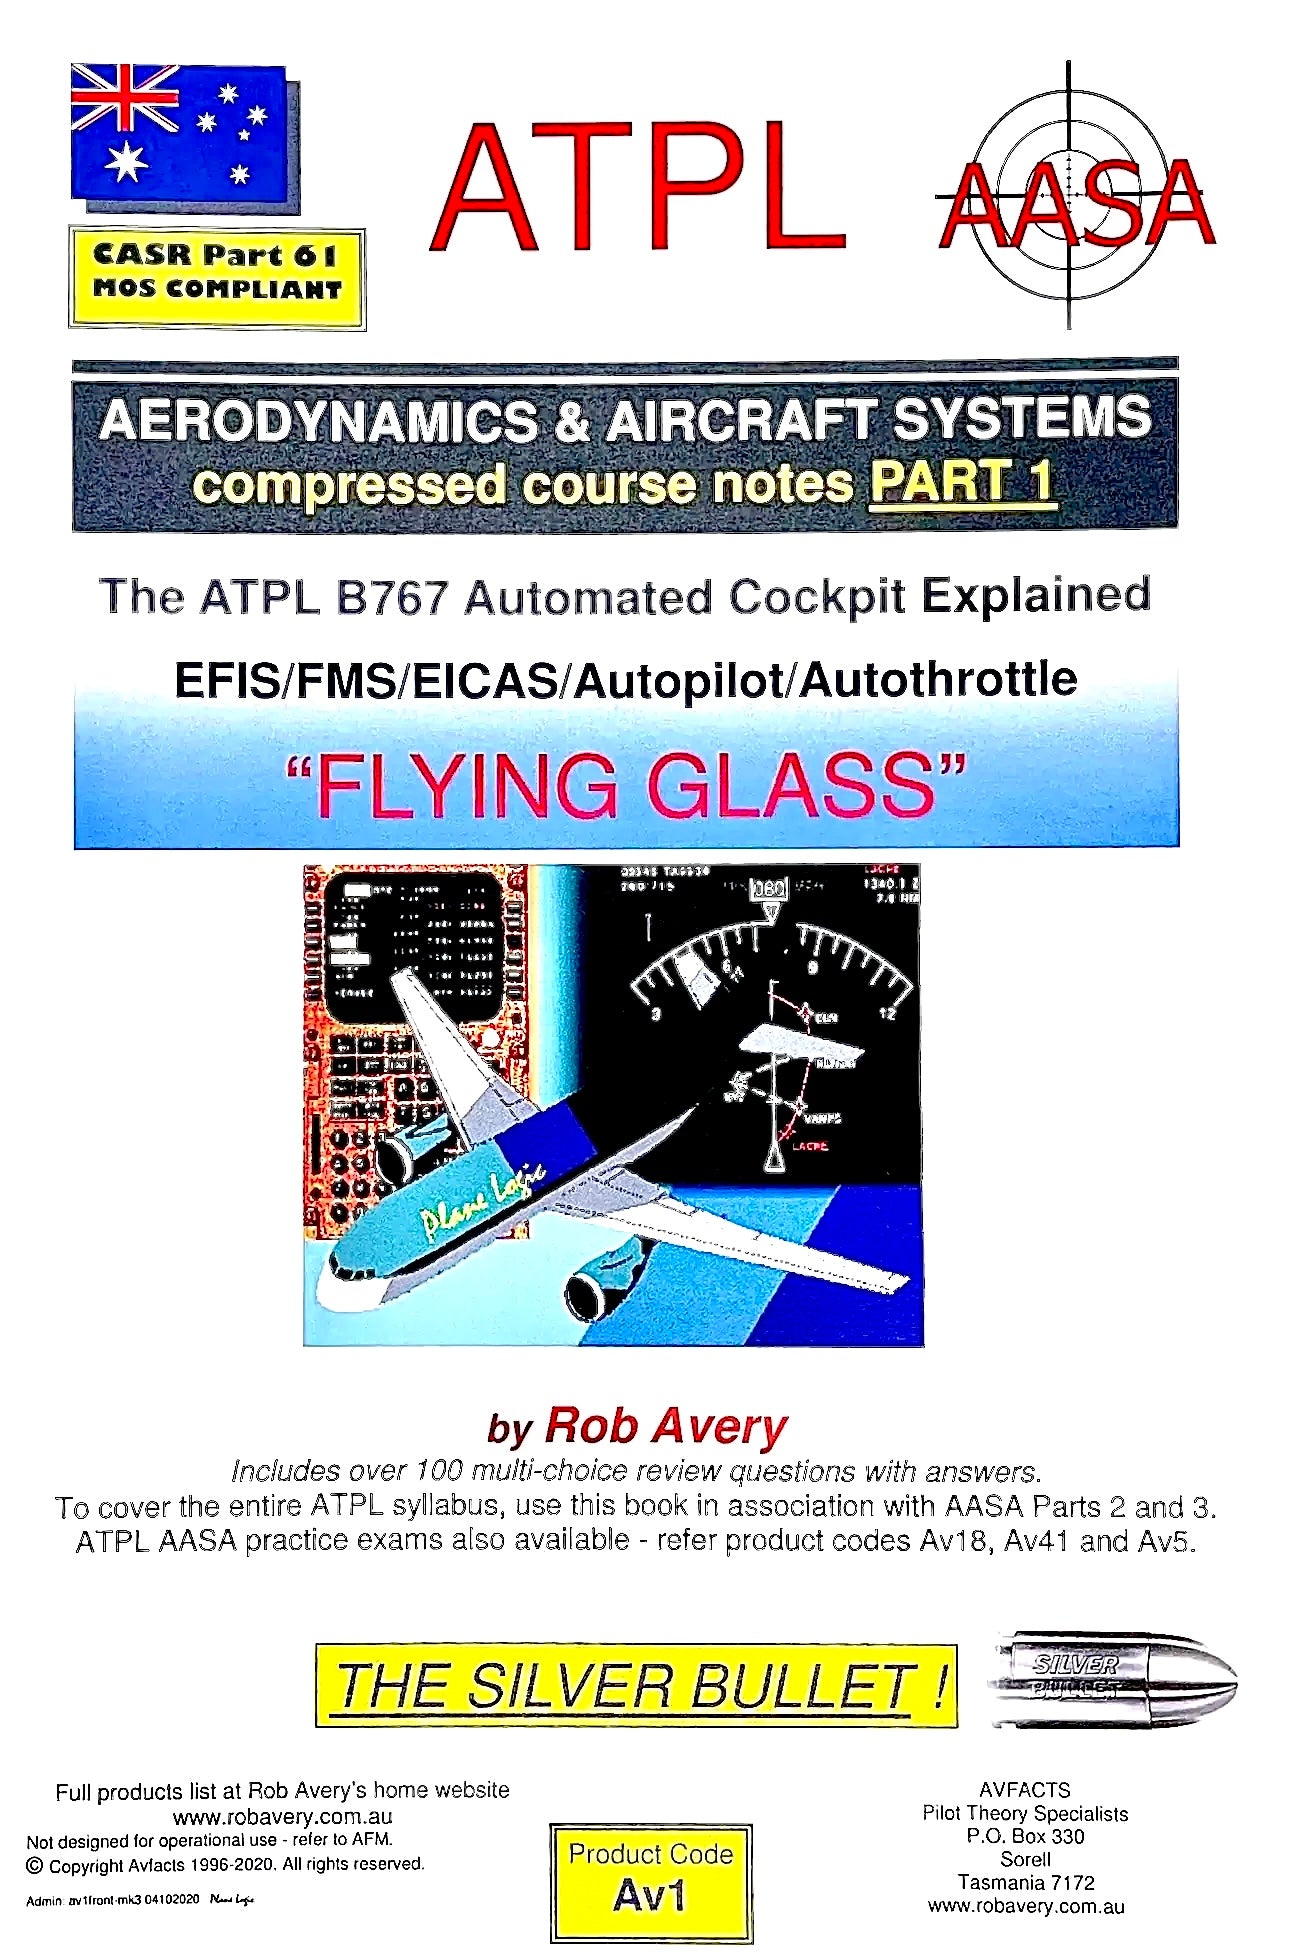 Avfacts by Rob Avery ATPL Aerodynamics & Aircraft Systems - Part 1 Flying Glass - AV1